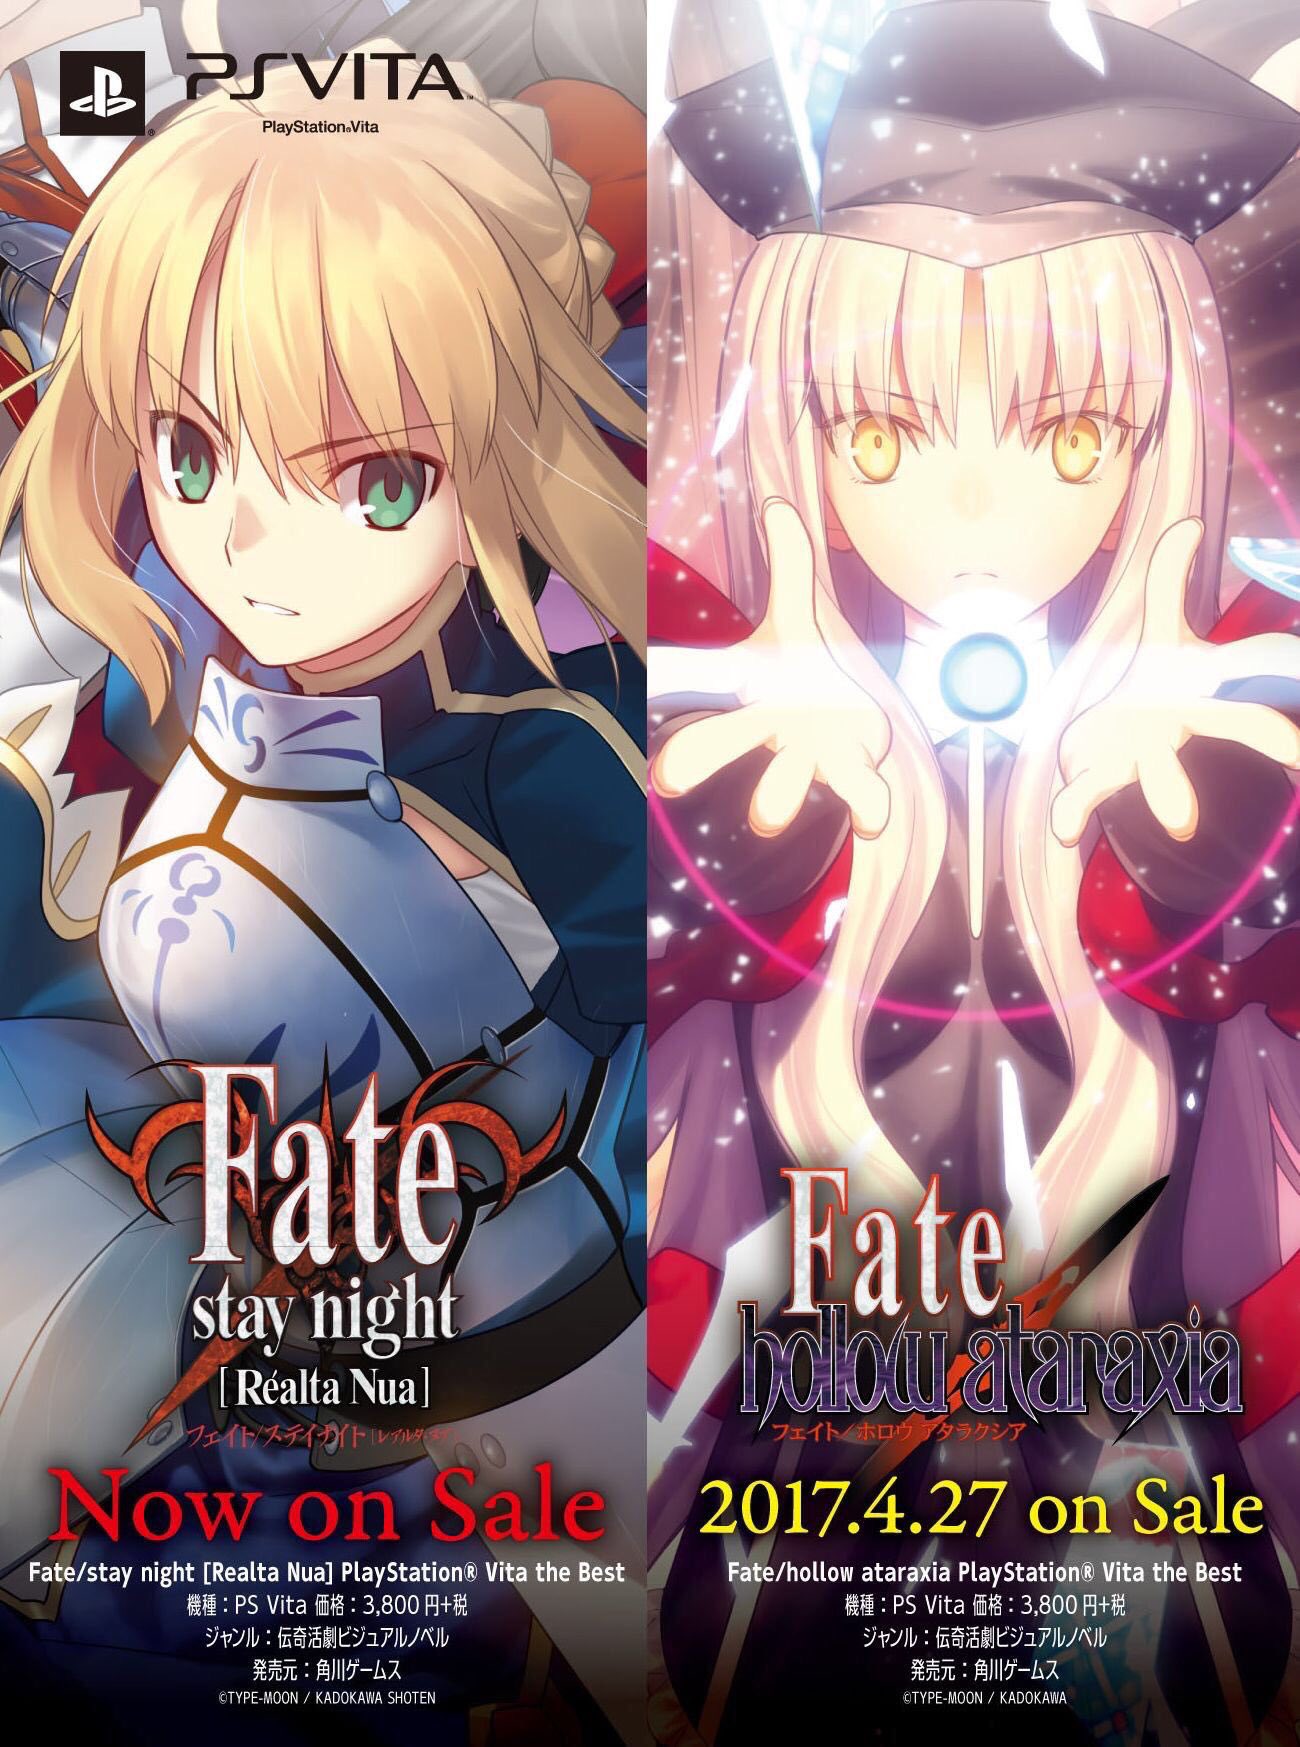 Fate/Stay Night [Realta Nua] (Playstation Vita the Best)